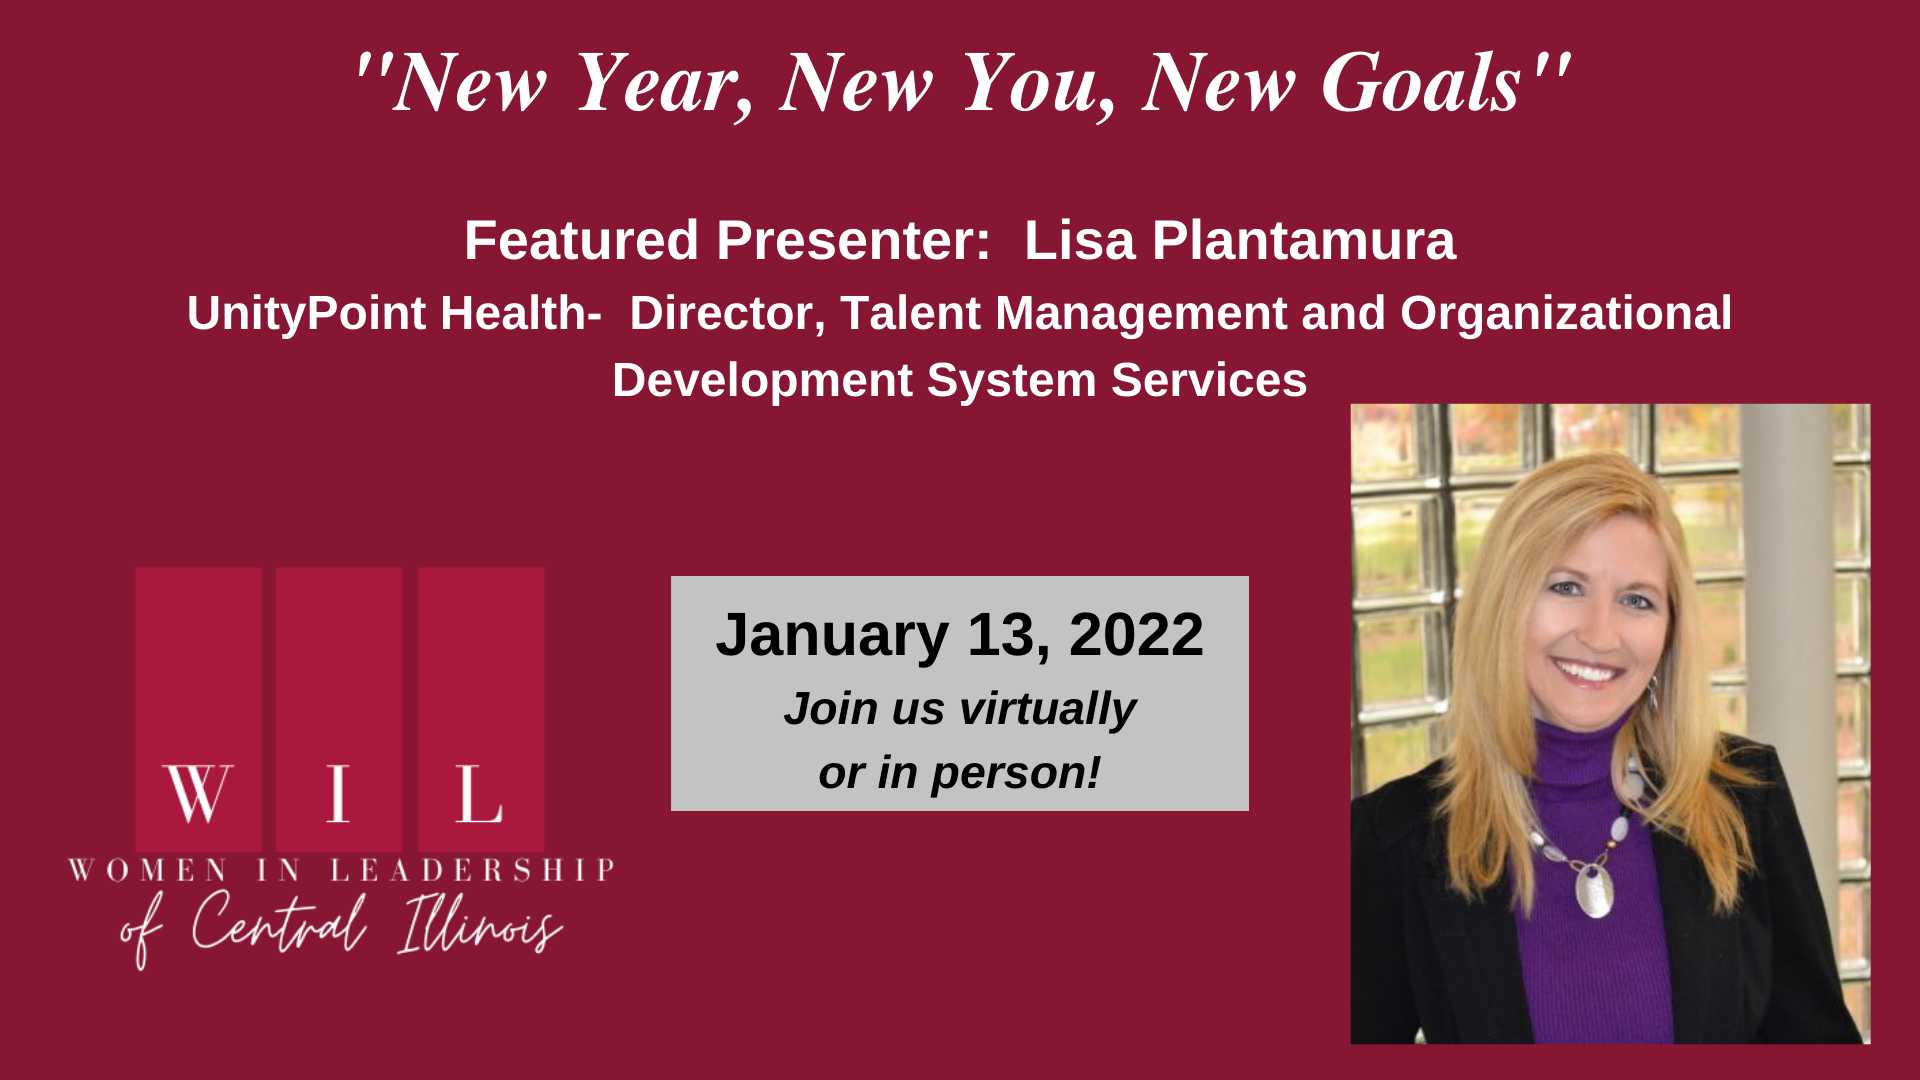 "New Year, New You, New Goals" Featured presenter Lisa Plantamura.